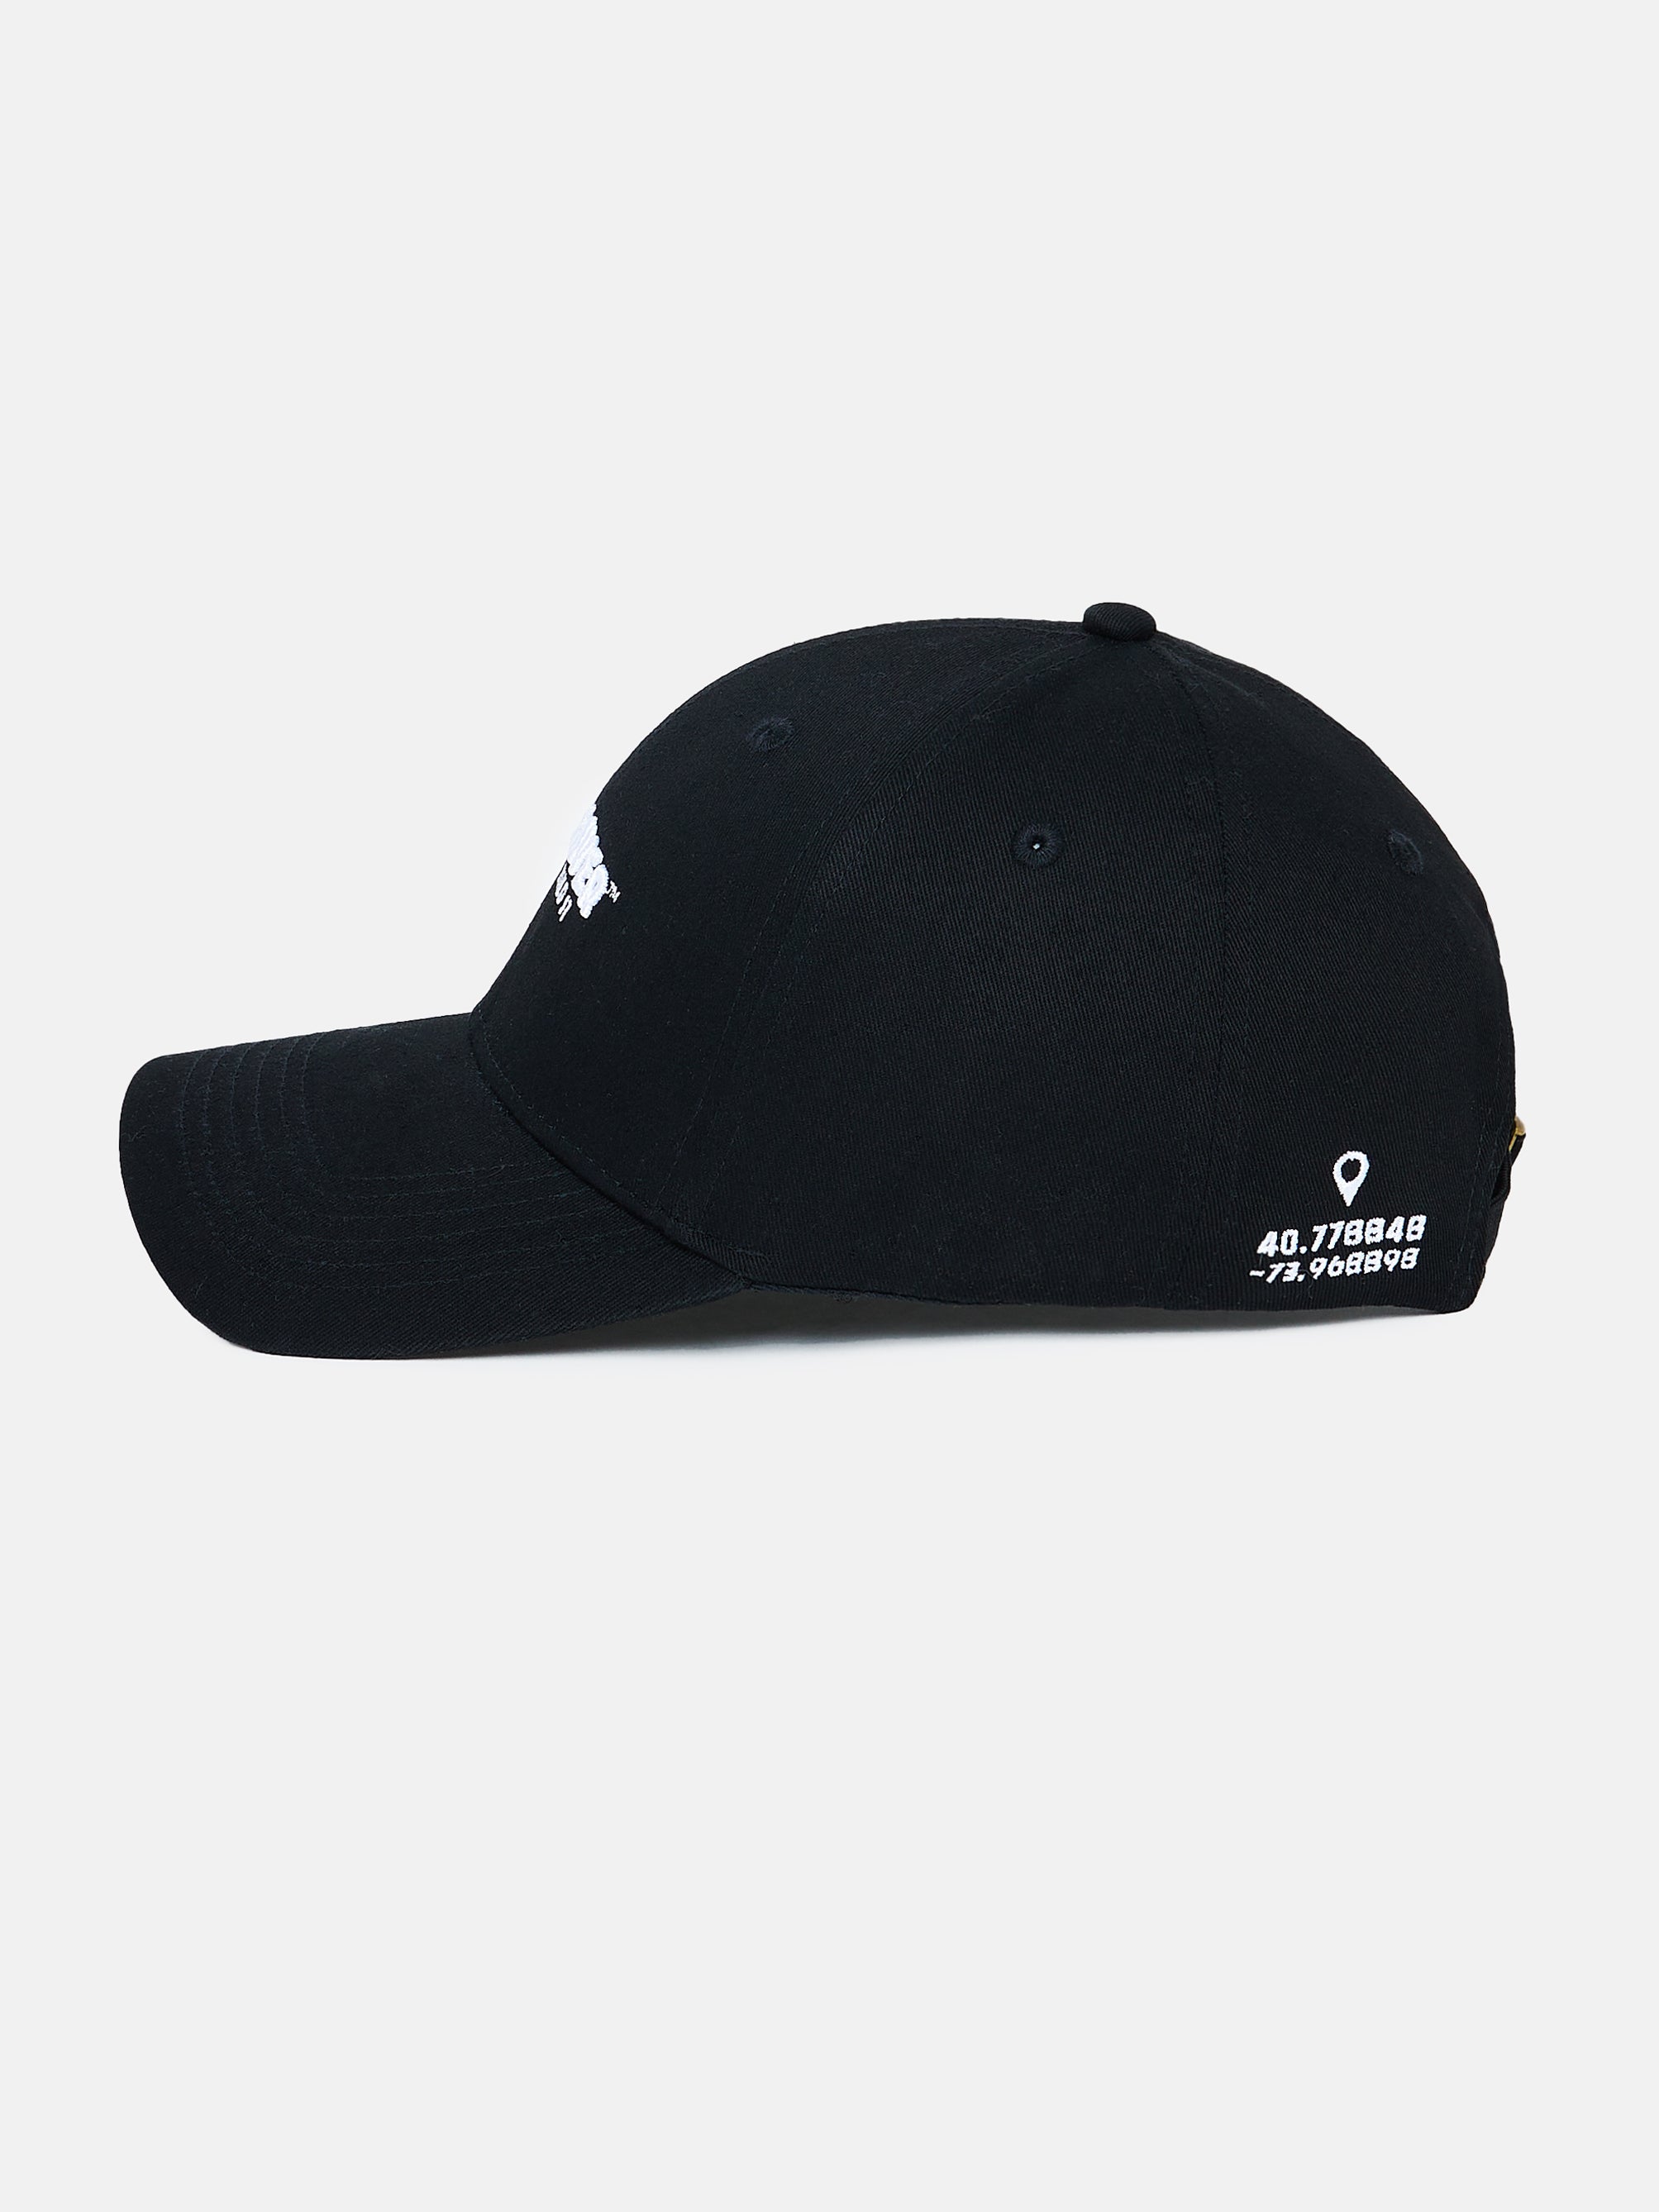 ESSENTIAL Black Baseball Cap